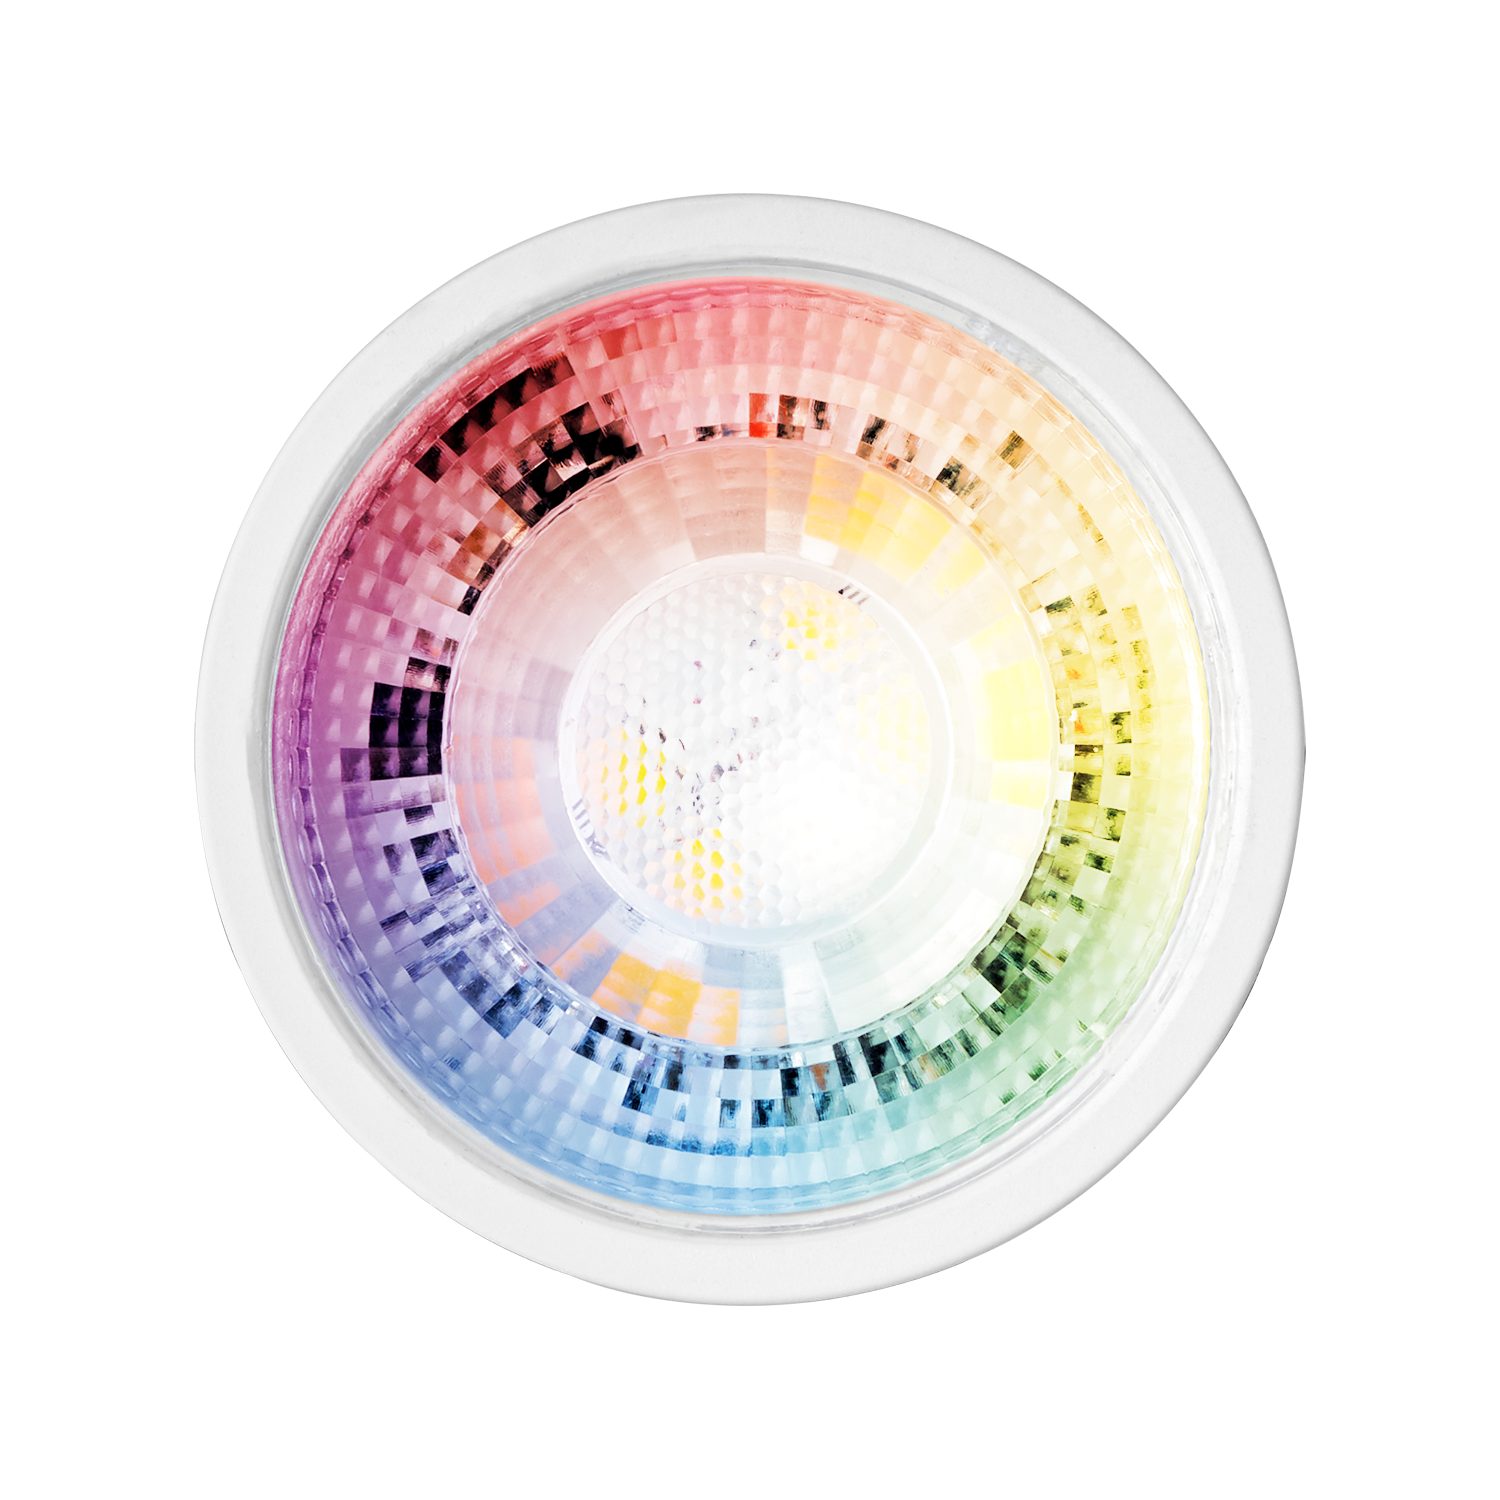 Einbaustrahler LEDANDO Kristall LED RGB mit GU10 / LED LED von in Glas 3W Set 10er Einbaustrahler